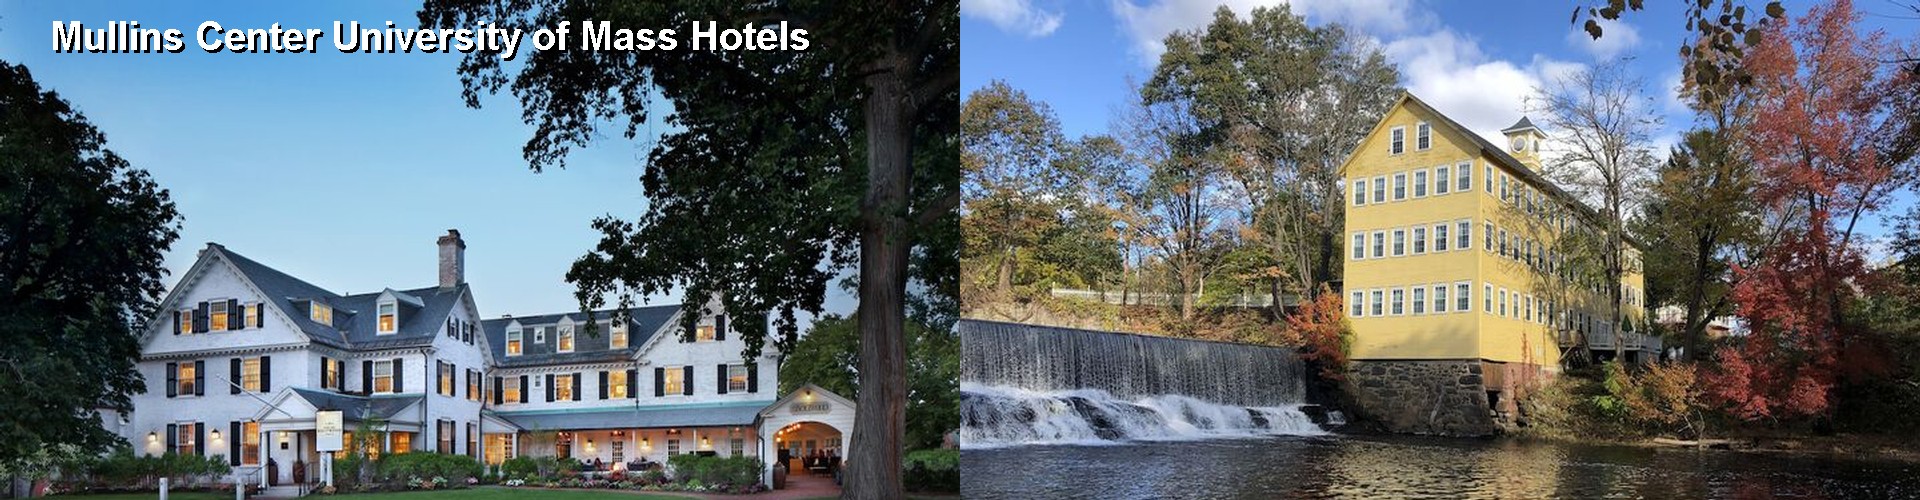 5 Best Hotels near Mullins Center University of Mass